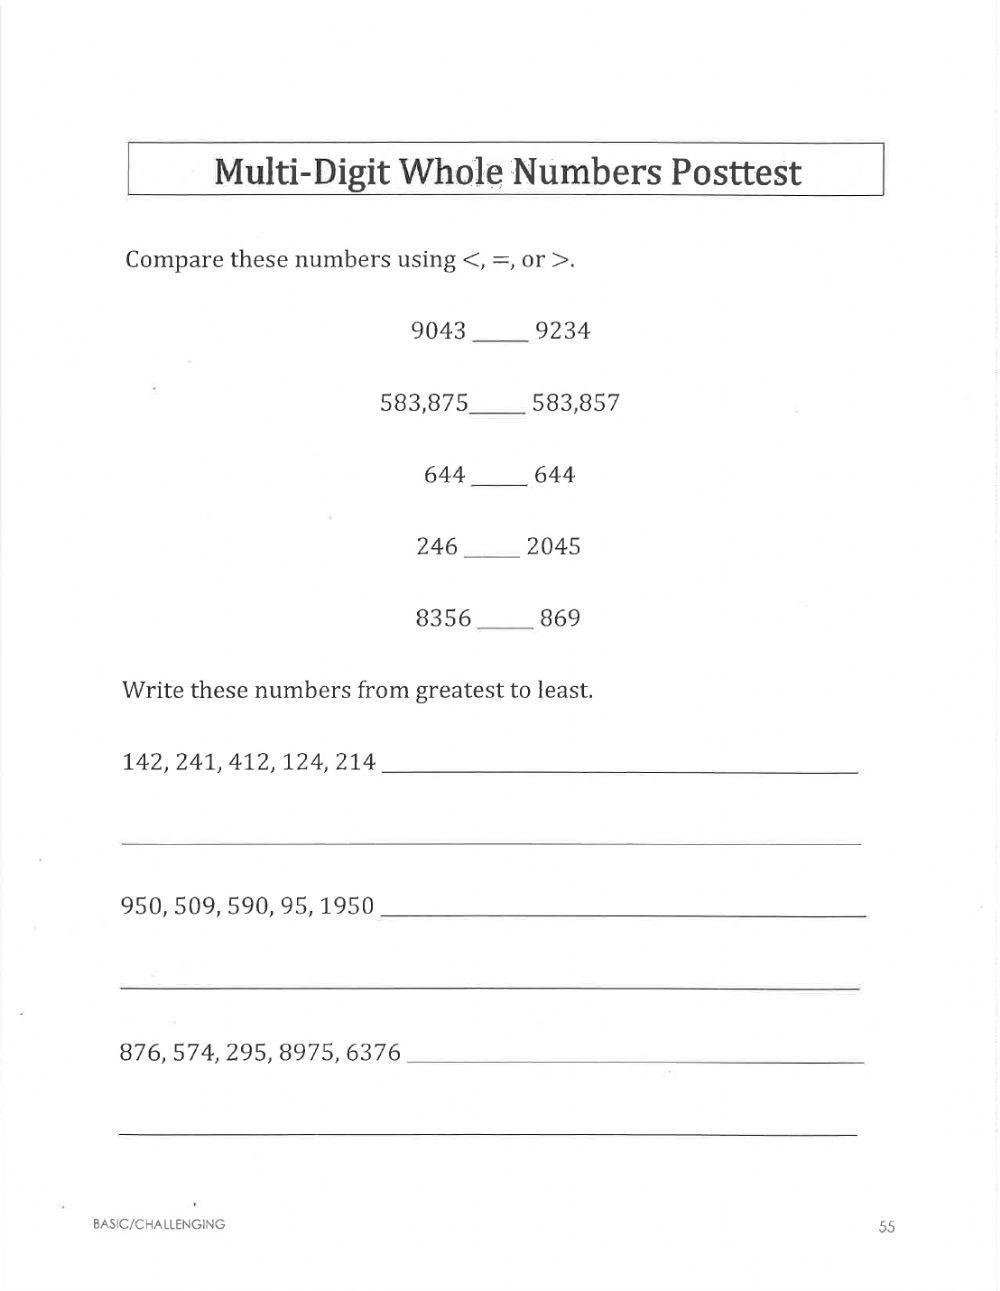 Multi-Digit Whole Numbers Posttest